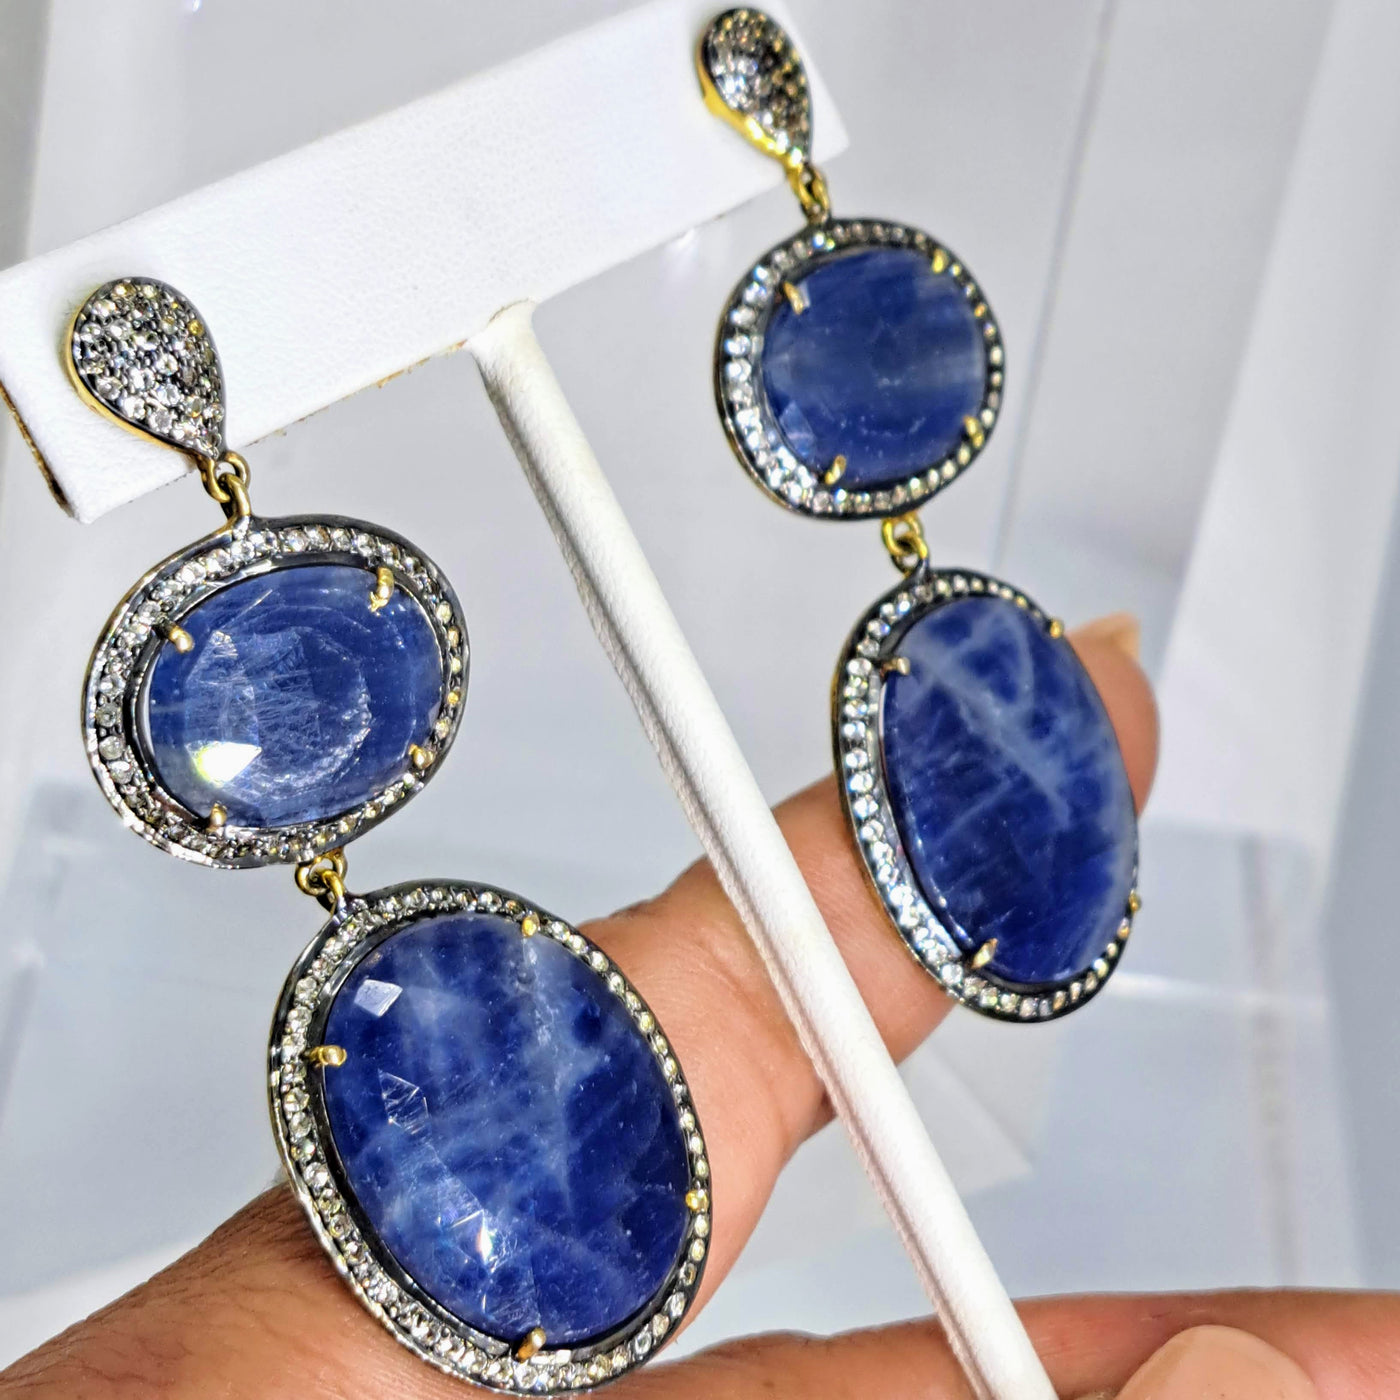 "Blue Beauty" 2.75" Earrings - Sapphire and White Topaz